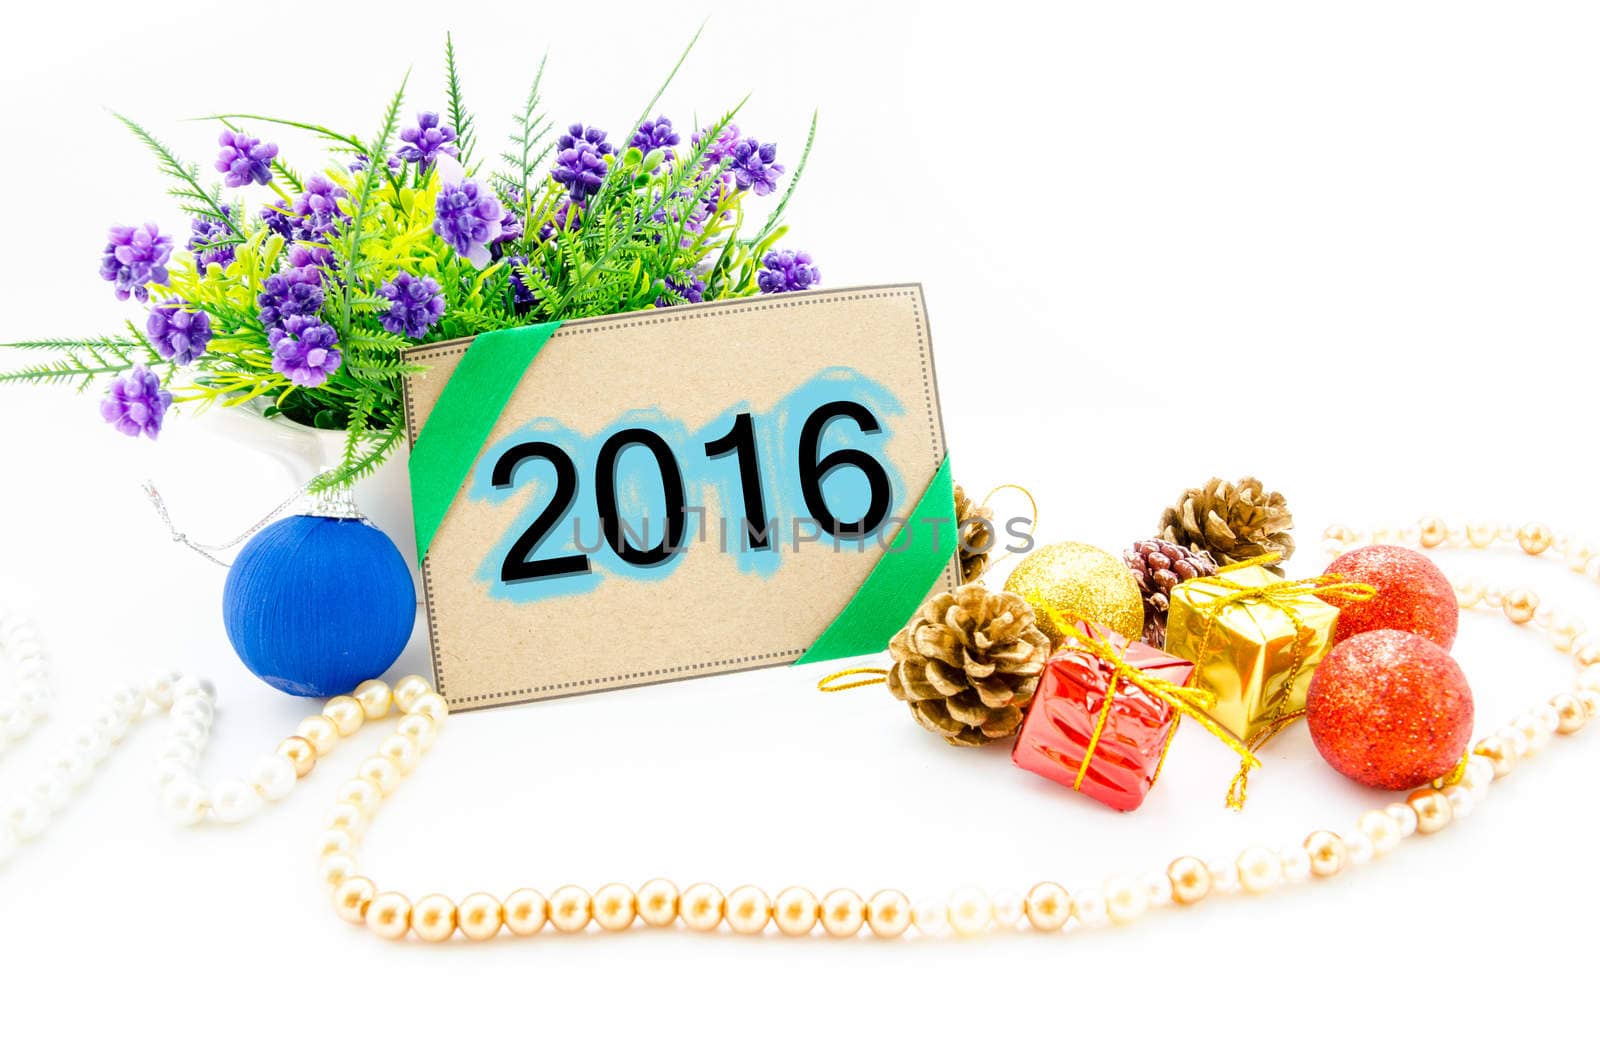 2016 new year decoration by Gamjai